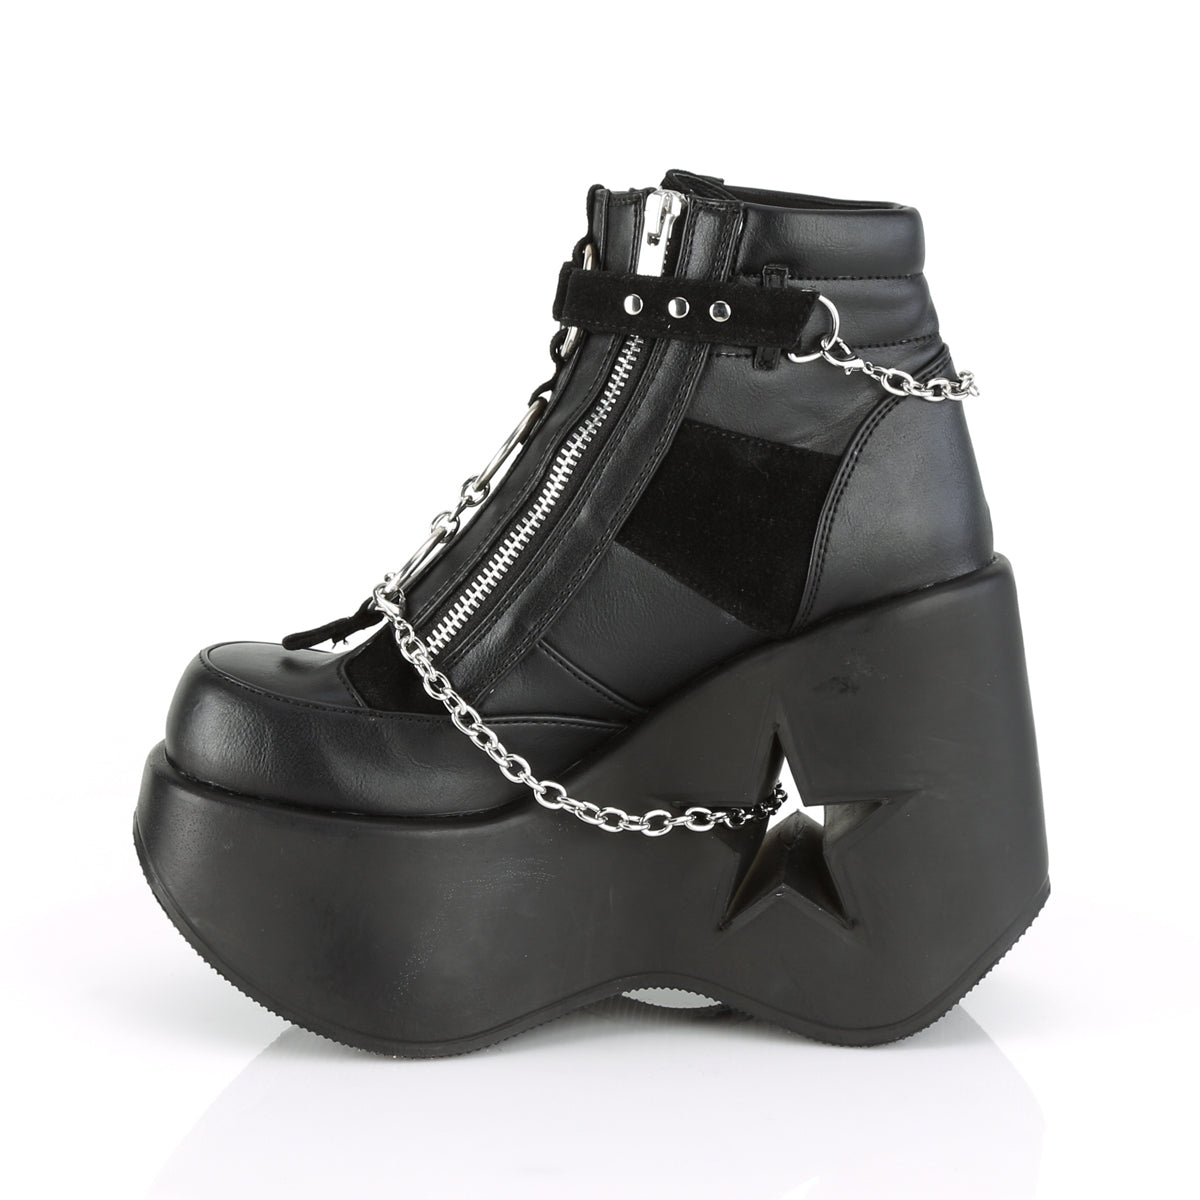 DYNAMITE-101 Demonia Black Vegan Leather-Vegan Suede Women's Ankle Boots [Demonia Cult Alternative Footwear]